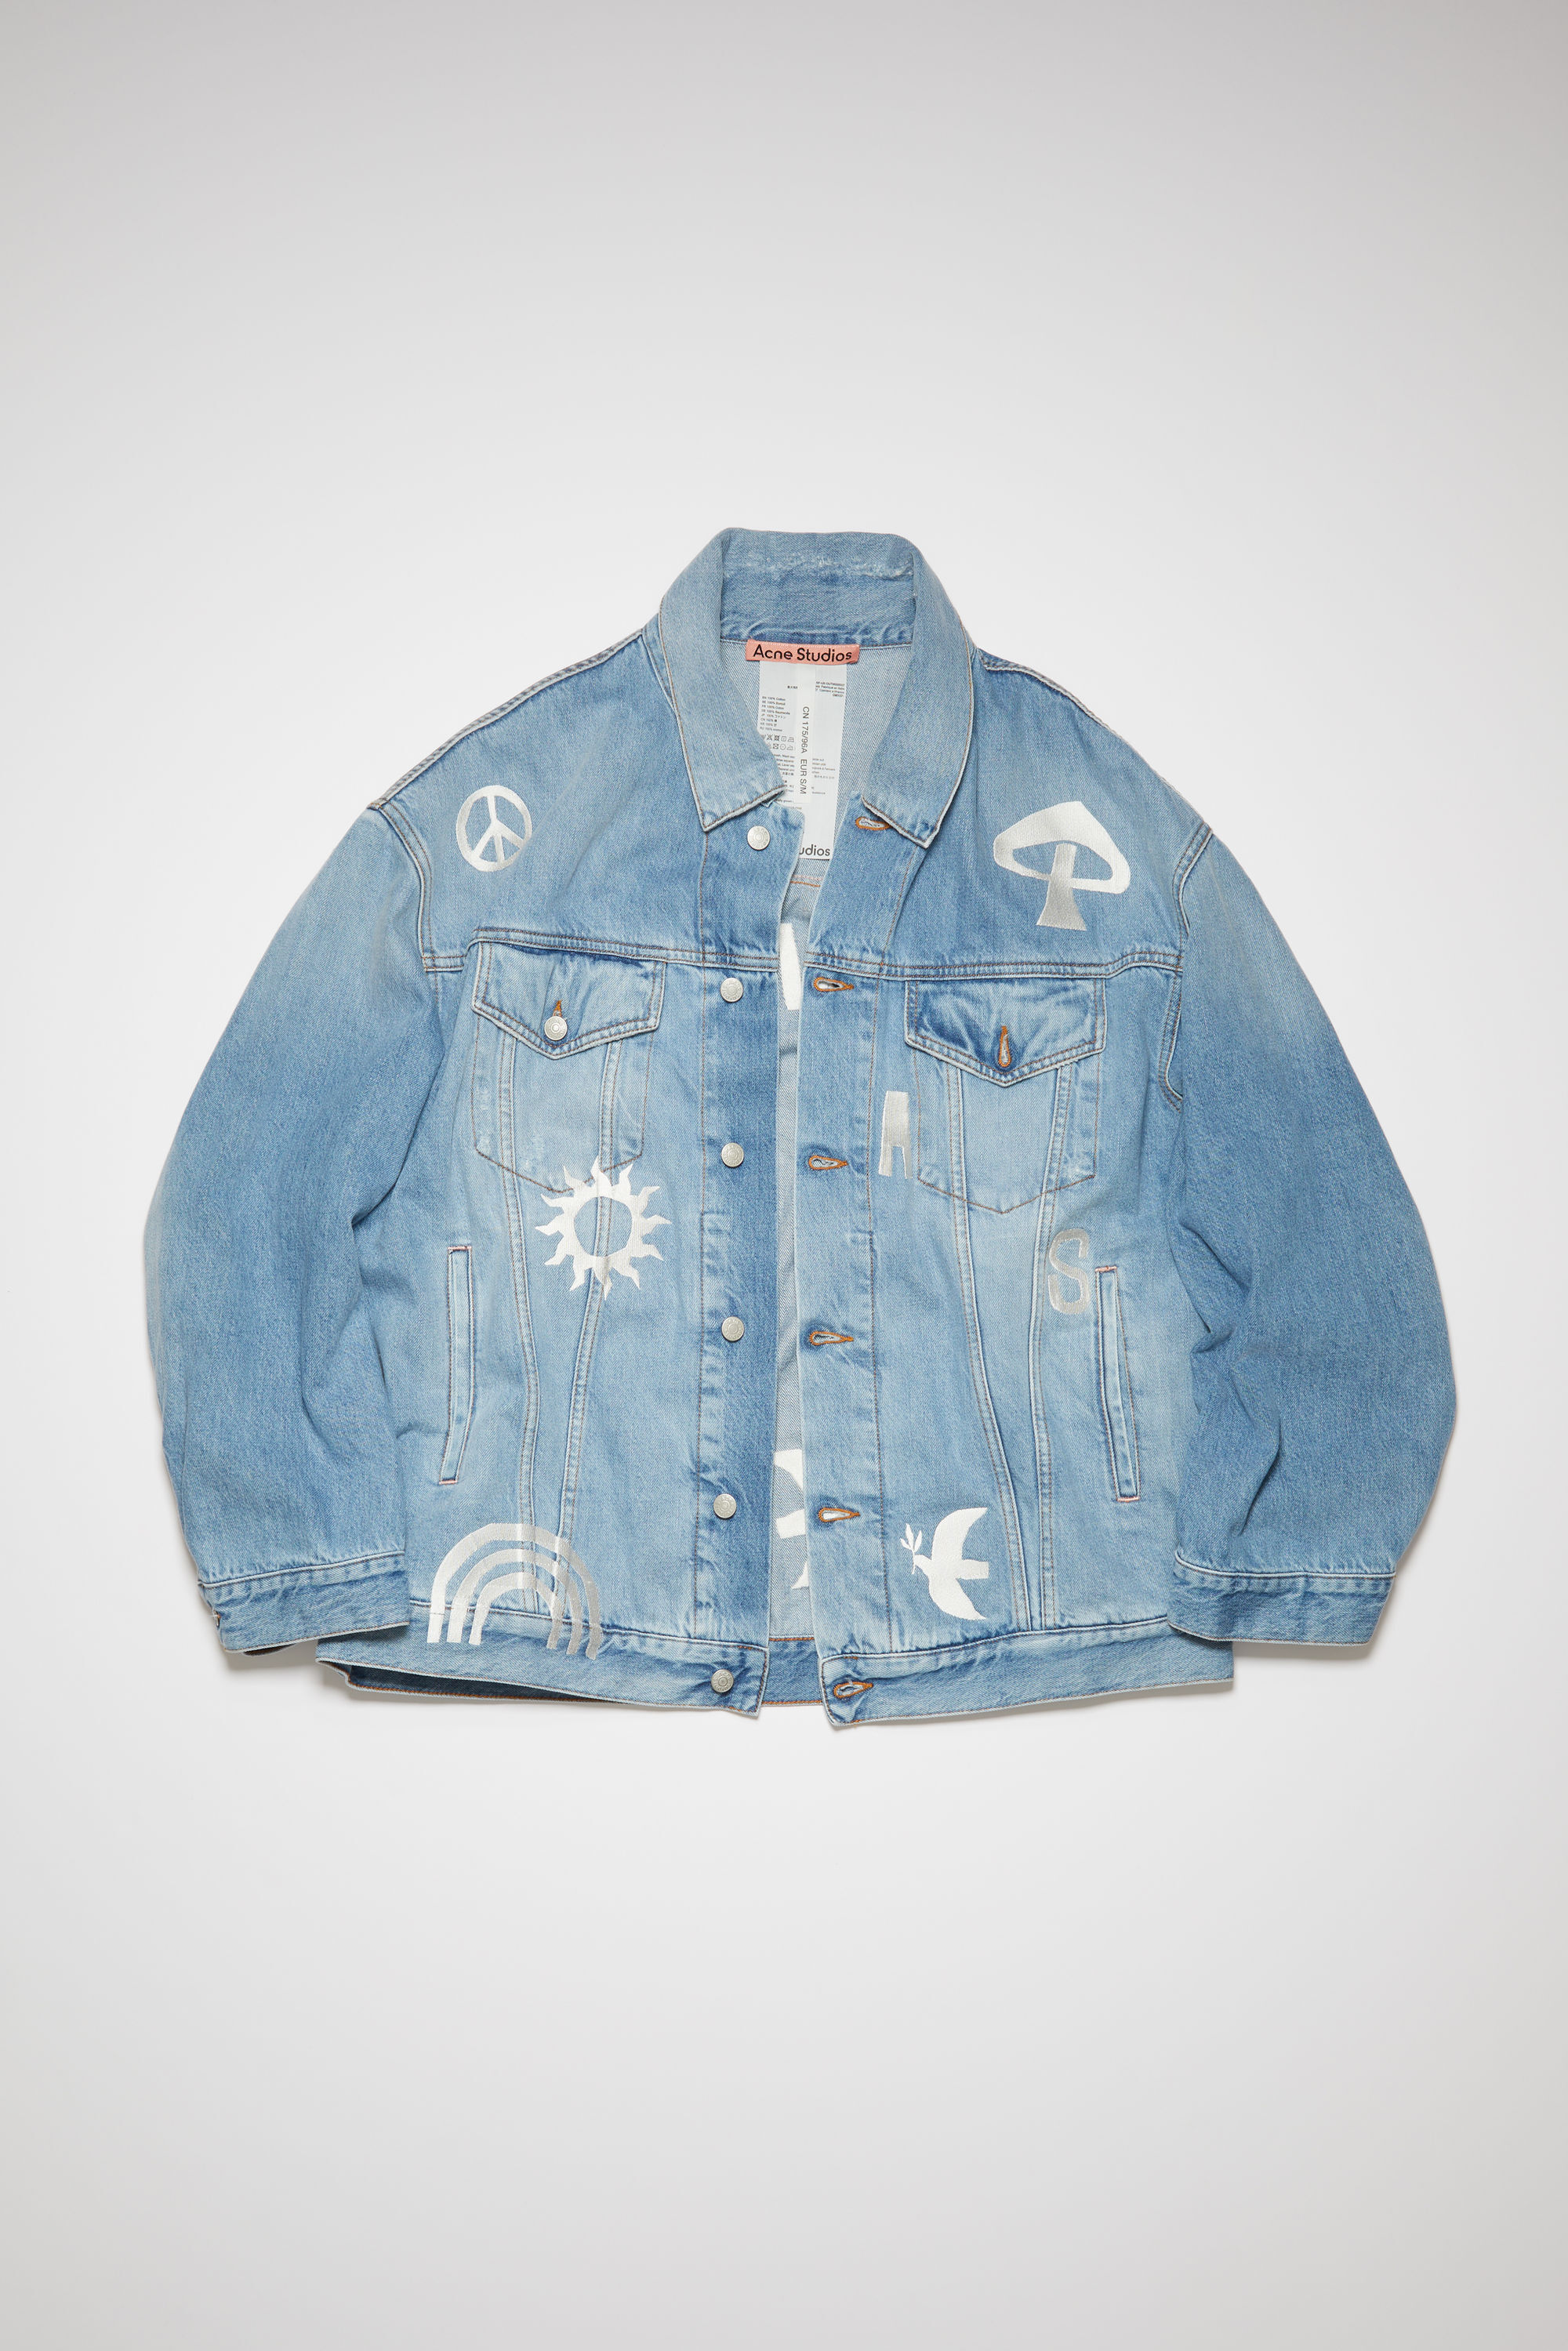 Acne Studios Soft Padded Jacket in Light Blue | FWRD